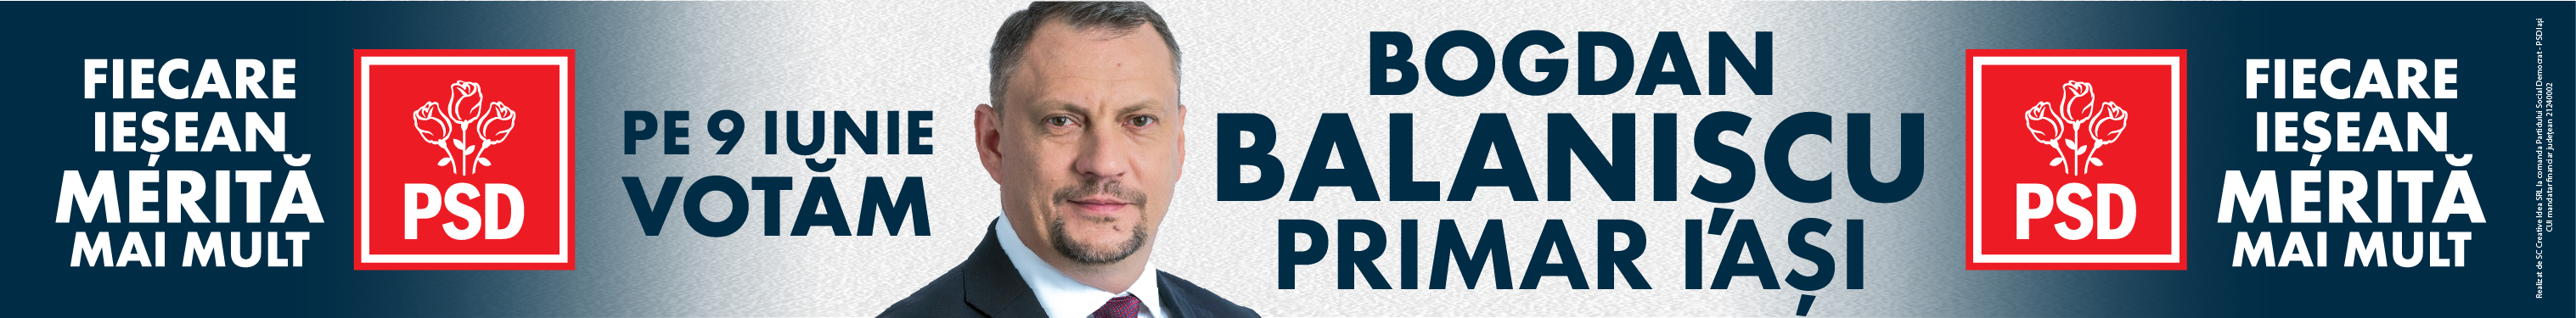 Banner Bogdan Balaniscu